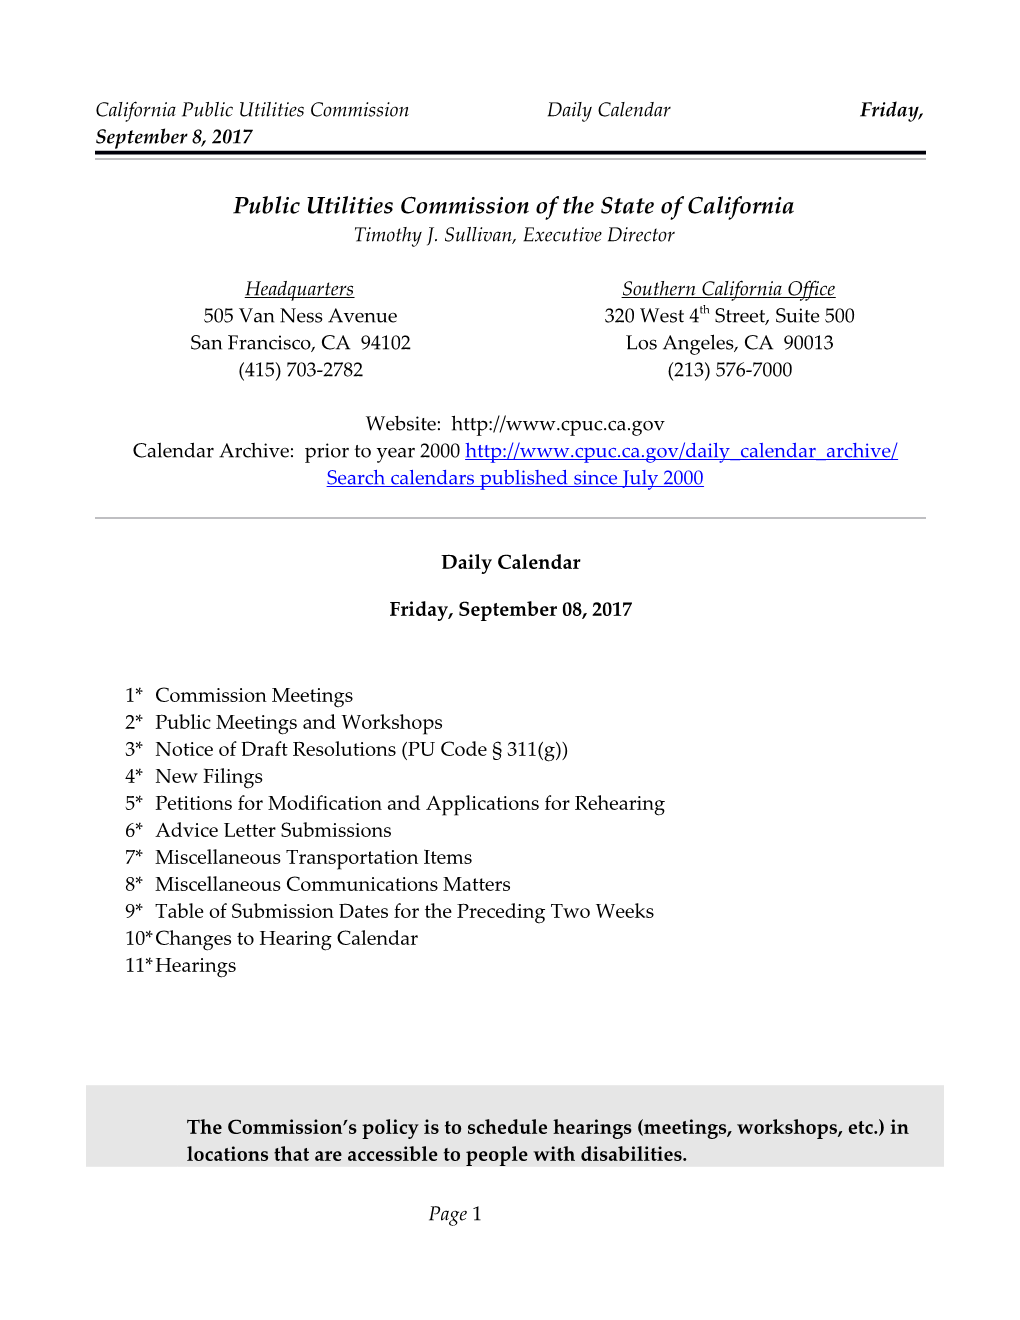 California Public Utilities Commission Daily Calendar Friday, September 8, 2017